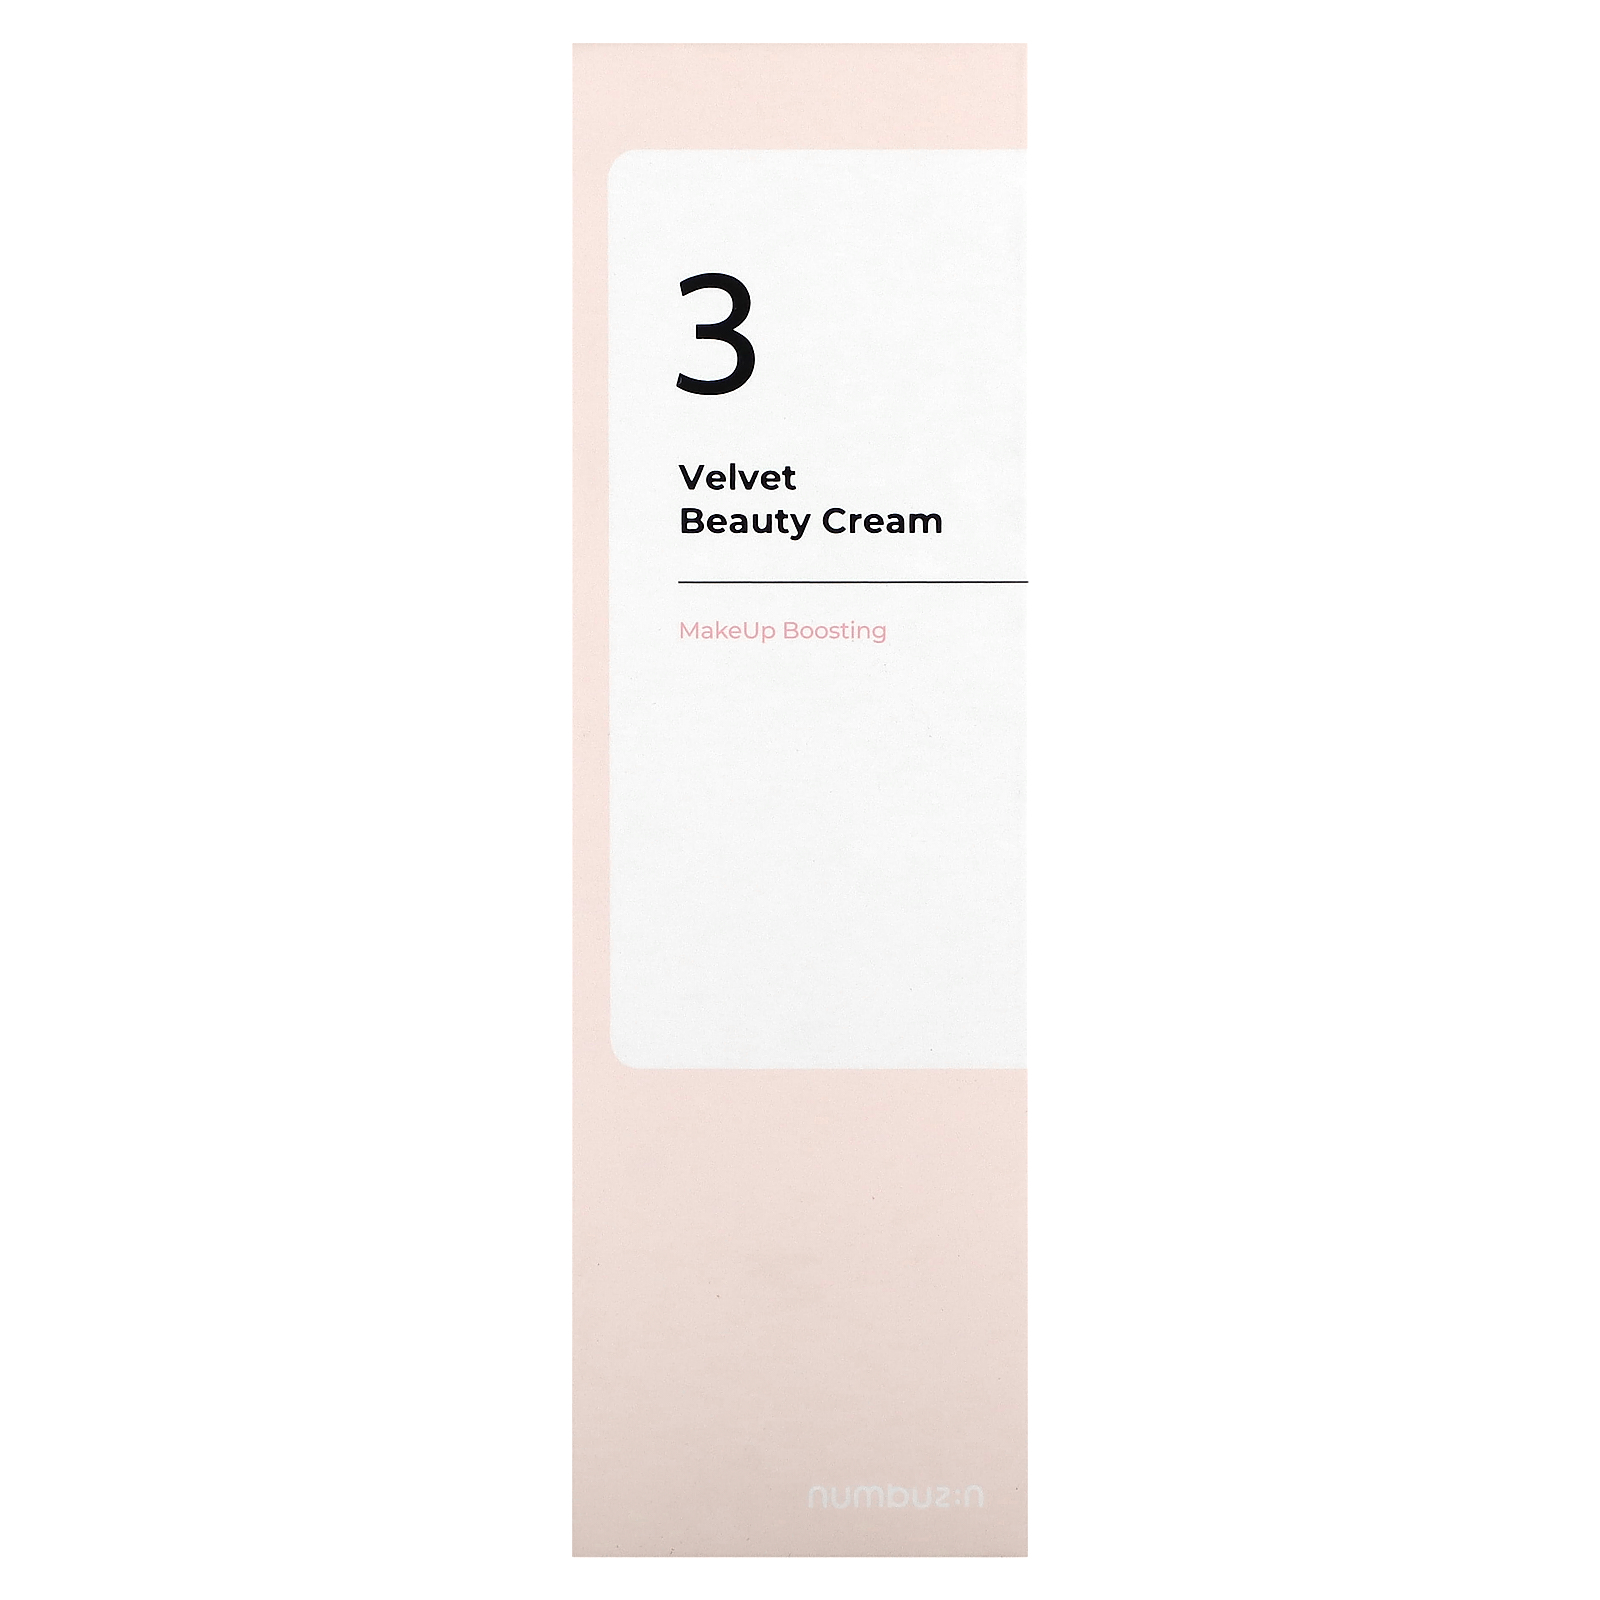 Numbuzin Velvet Beauty Cream, Makeup Boosting, No. 3, 2.02 fl oz (60 ml) - image 2 of 2